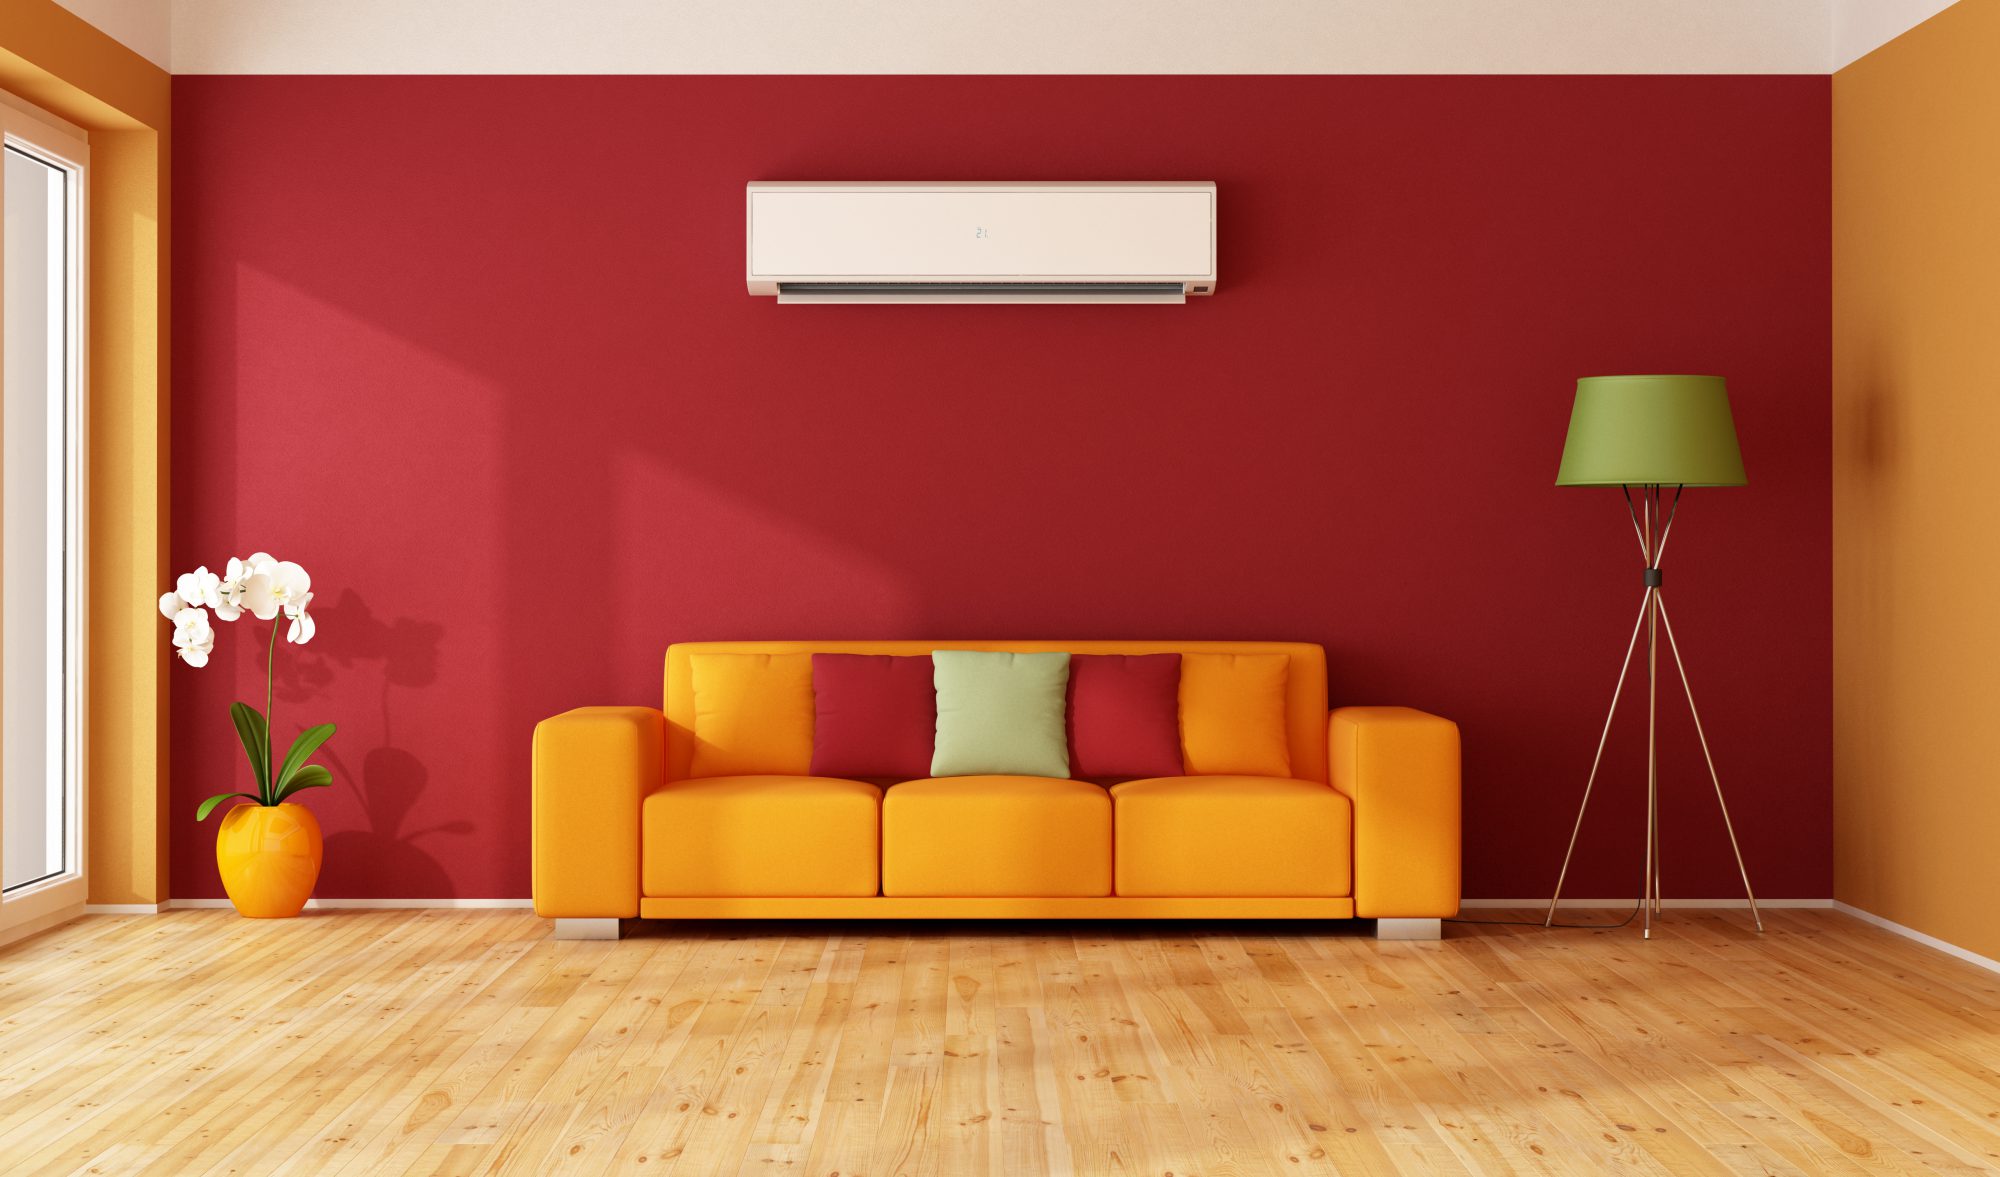 Consumo do ar-condicionado: guia completo para economizar energia